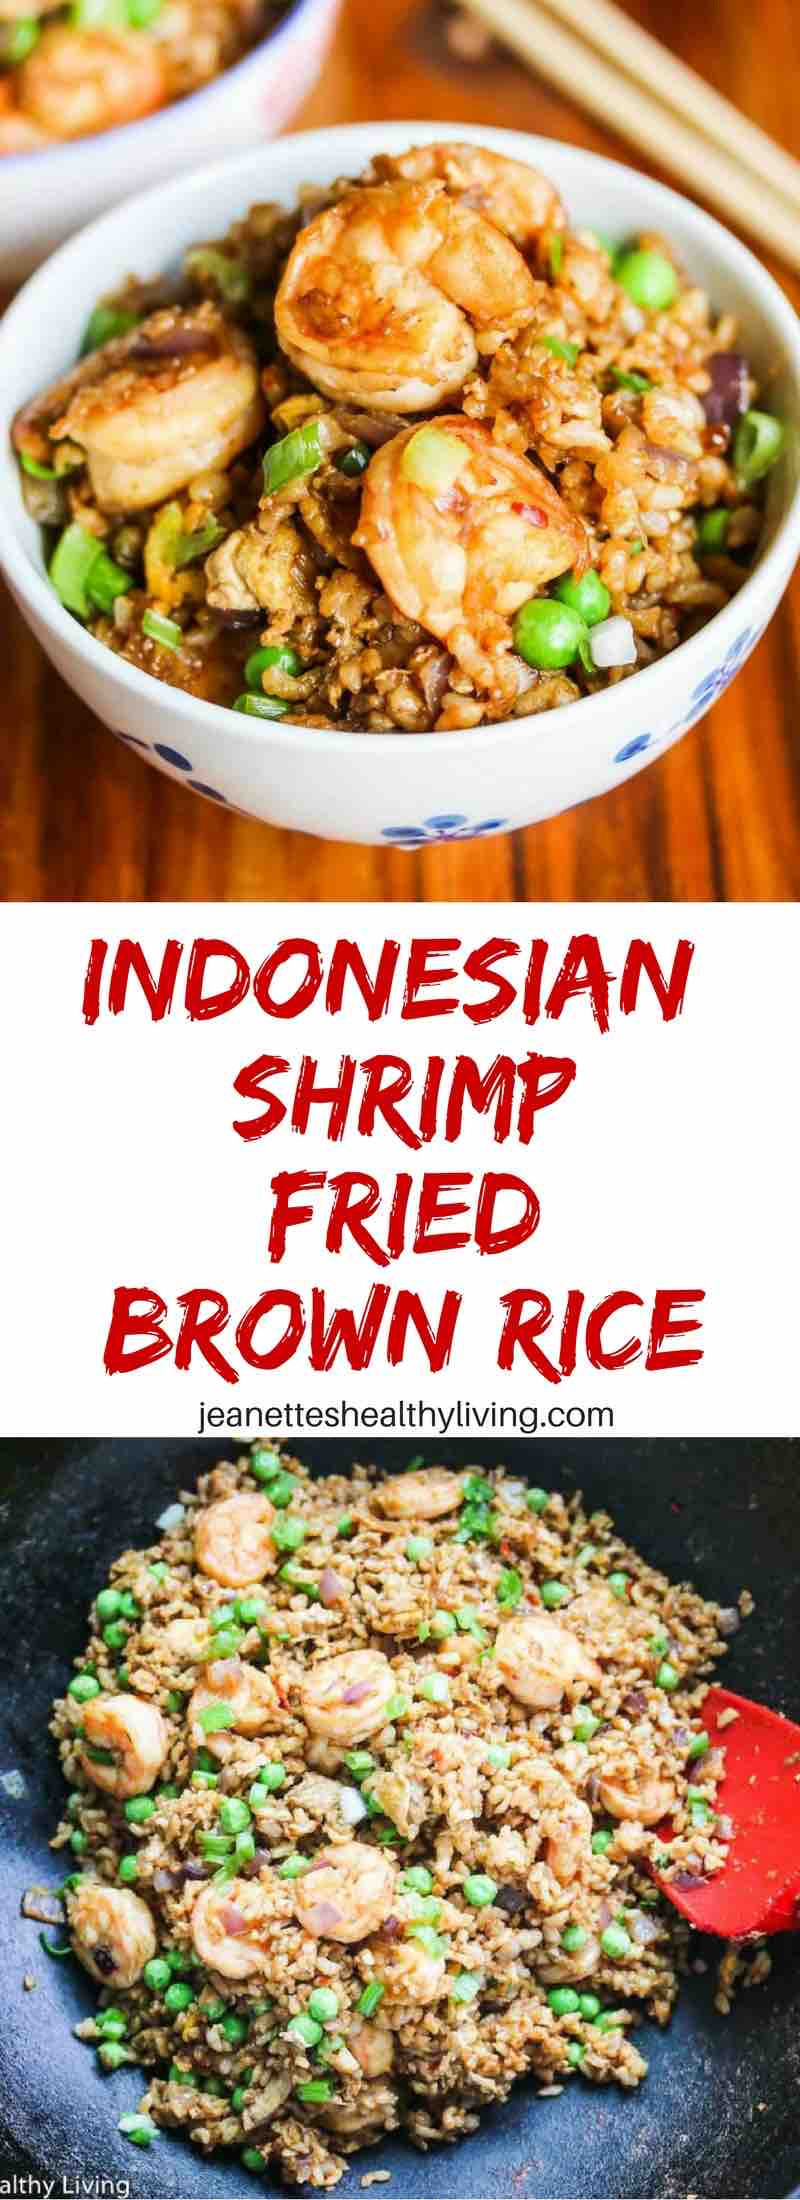 Shrimp Brown Rice Recipes
 Indonesian Shrimp Fried Brown Rice Recipe Jeanette s